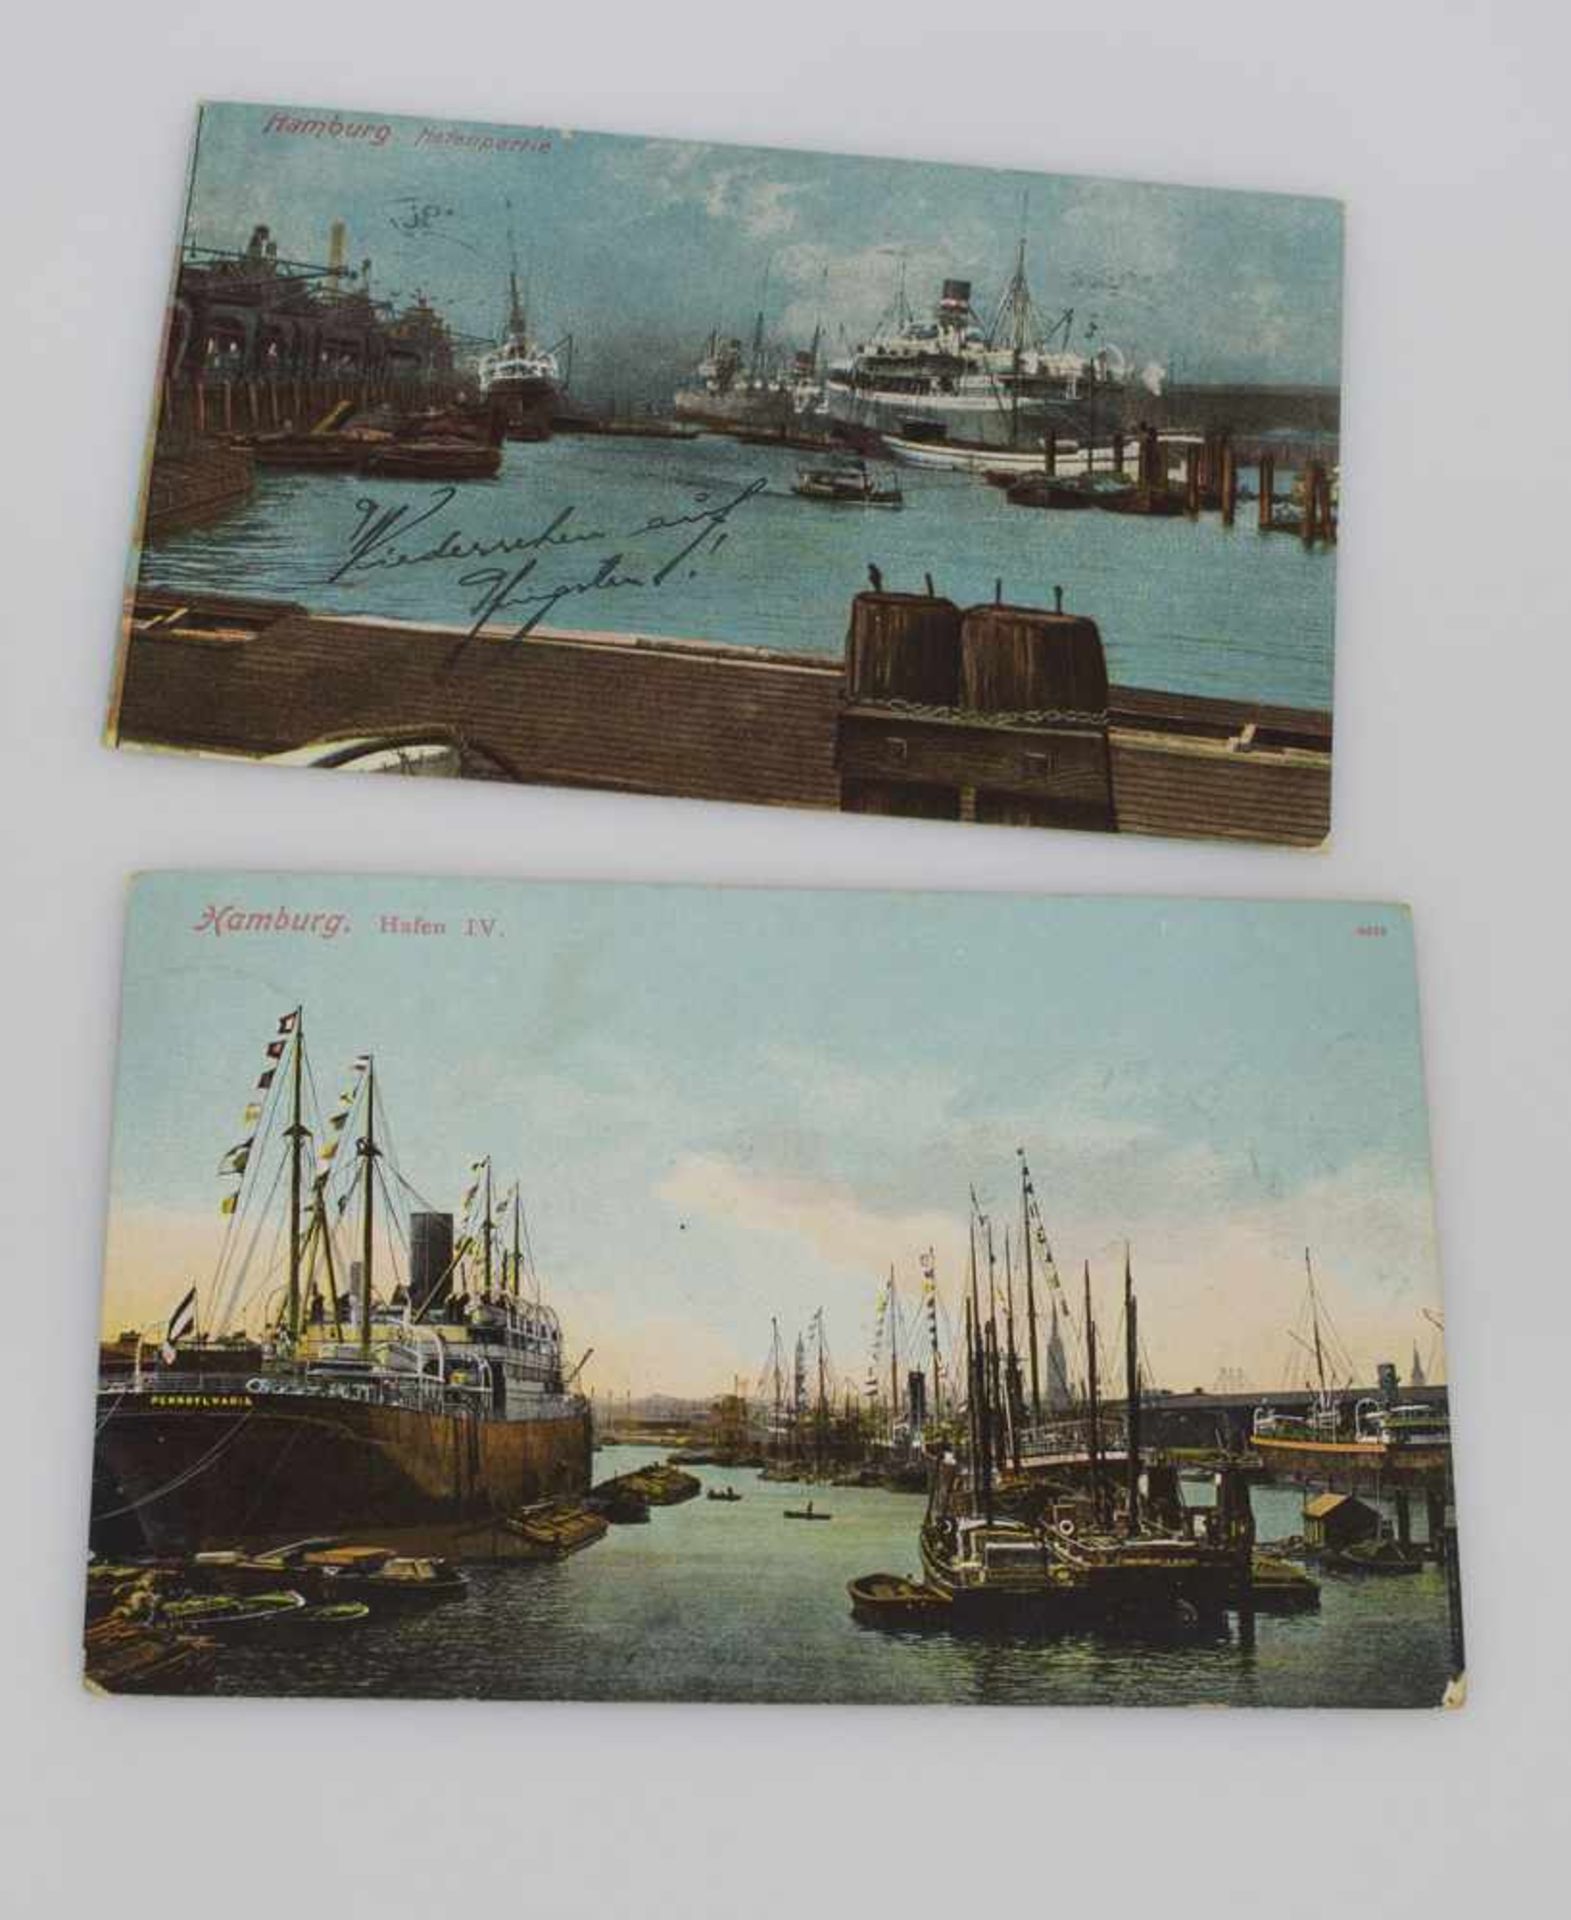 2 AnsichtskartenHamburg um 1914, Hamburg Hafen IV/ Hamburg Hafenpartie